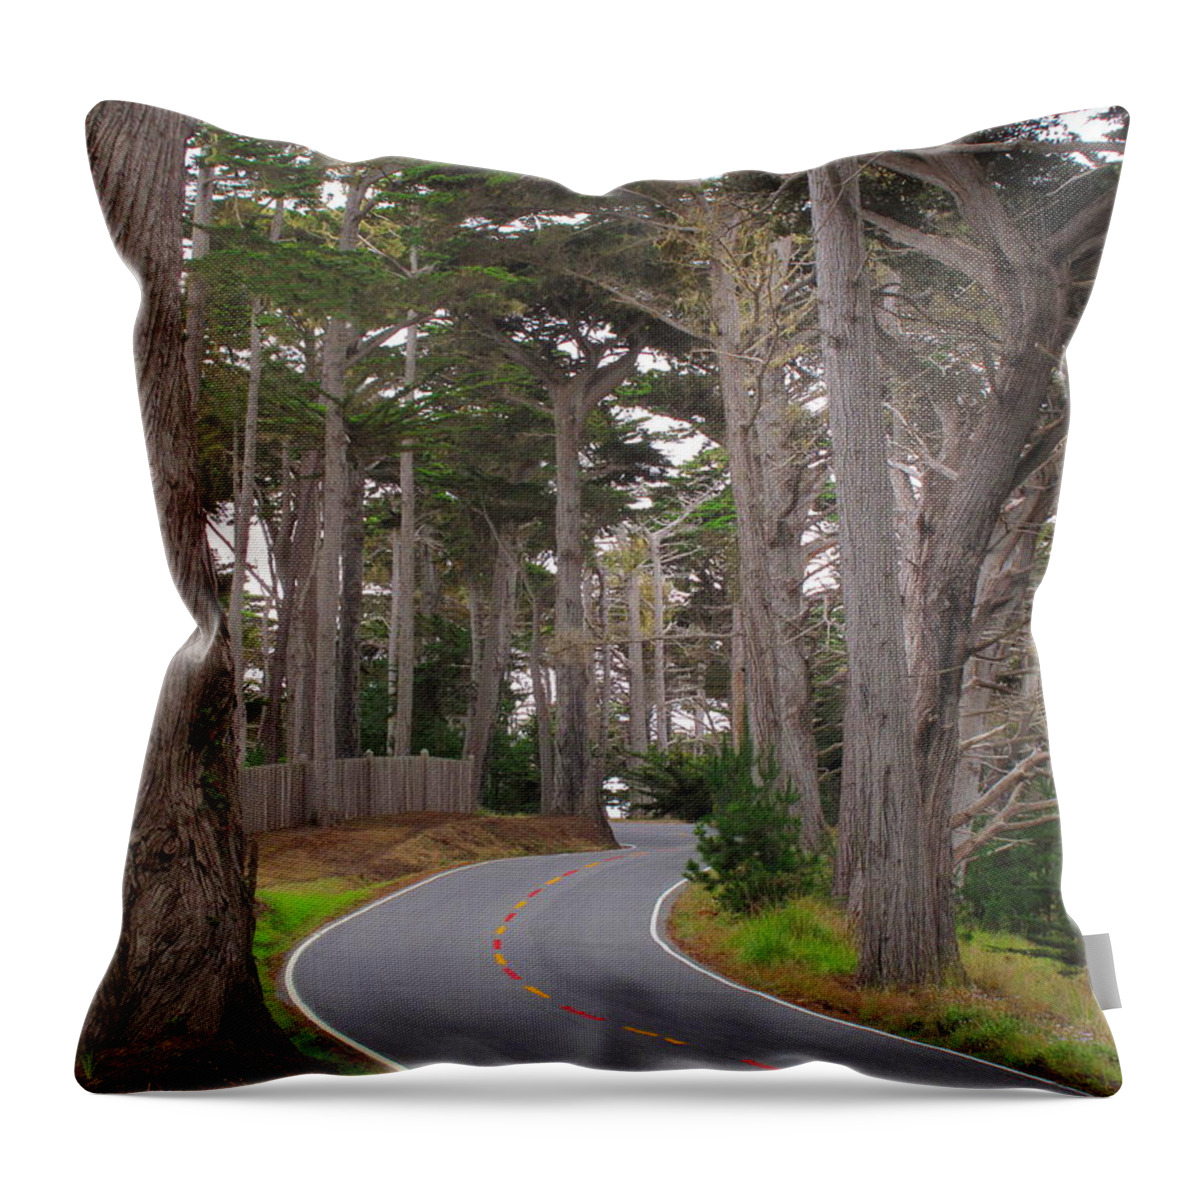 Pebble Beach Throw Pillow featuring the photograph 17 Mile Drive by Derek Dean